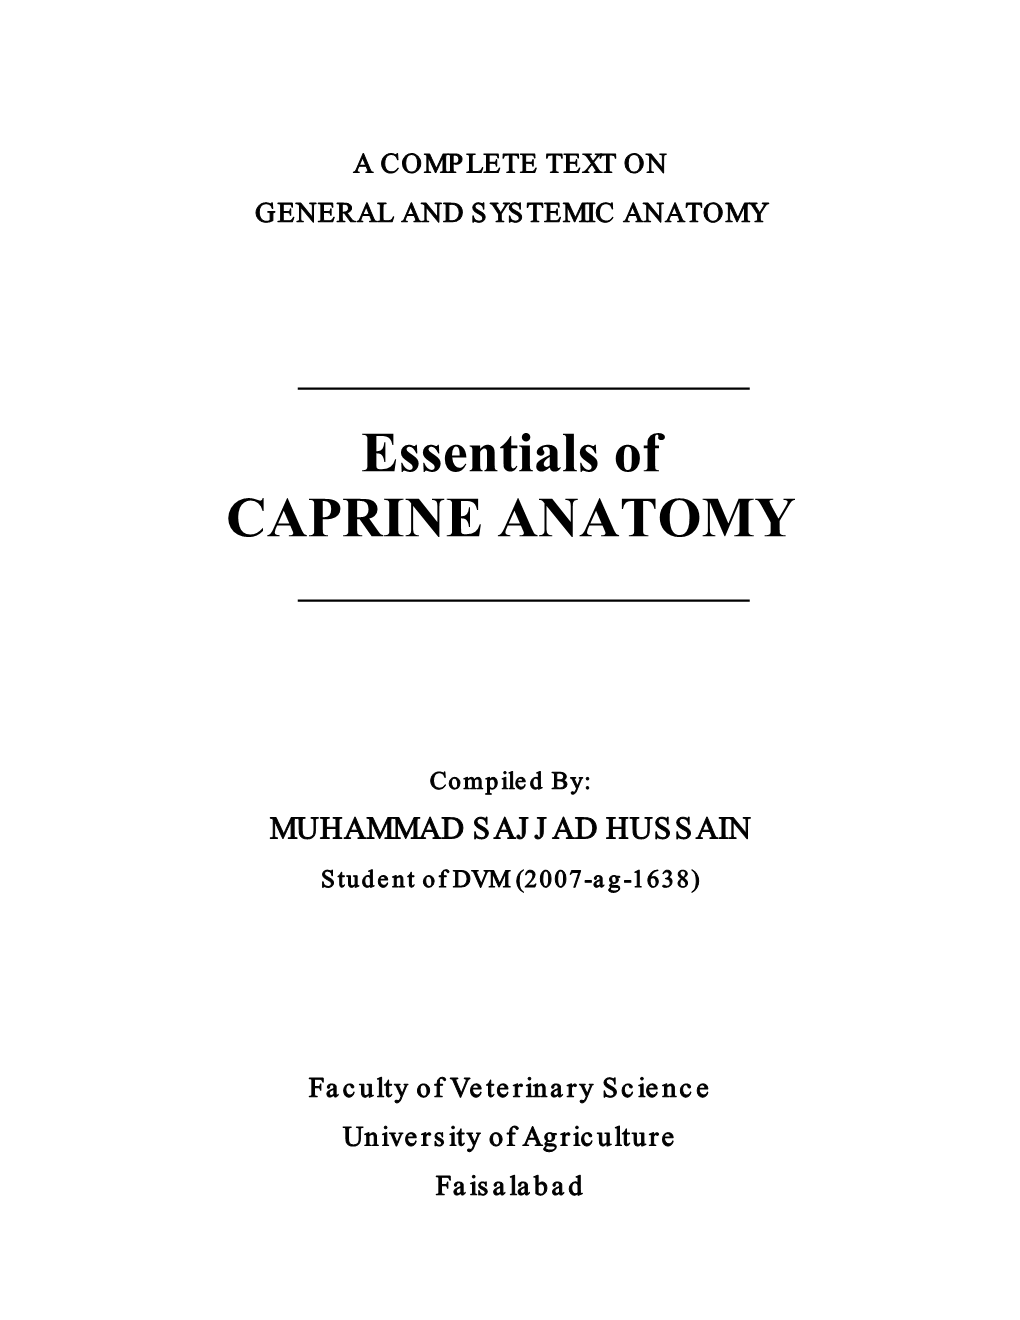 Essentials of CAPRINE ANATOMY